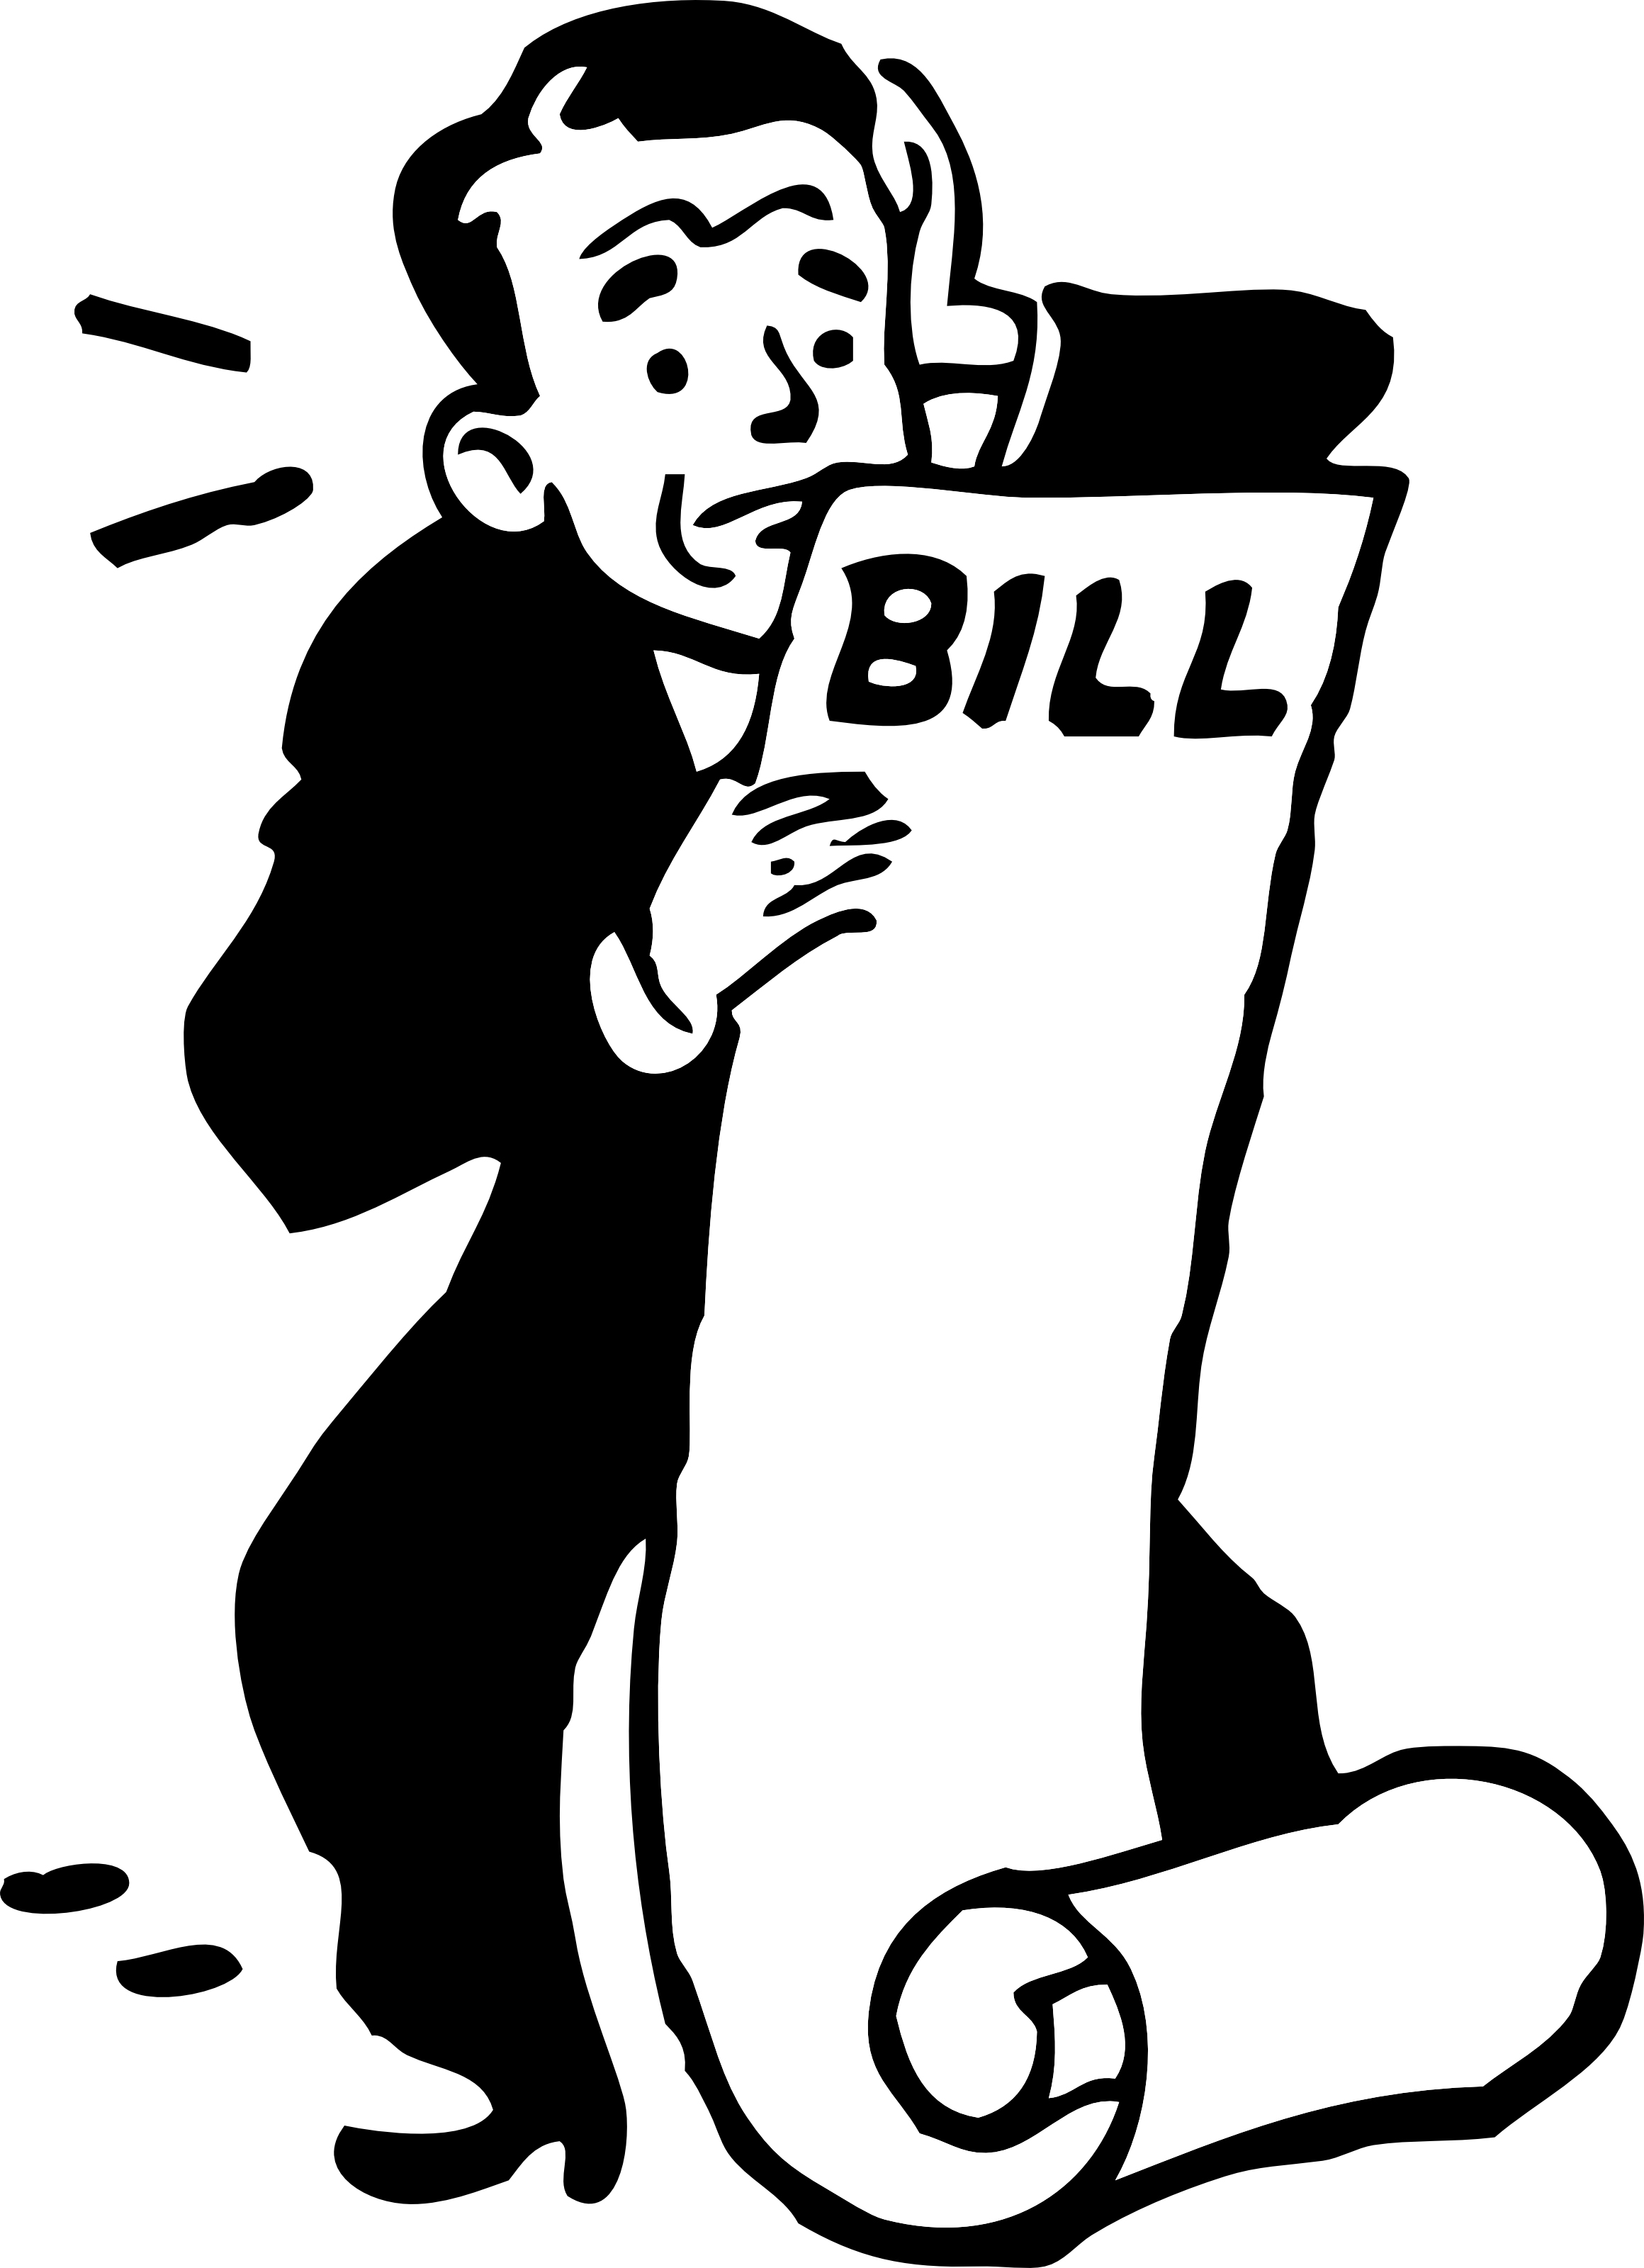 Bill to Law Clip Art